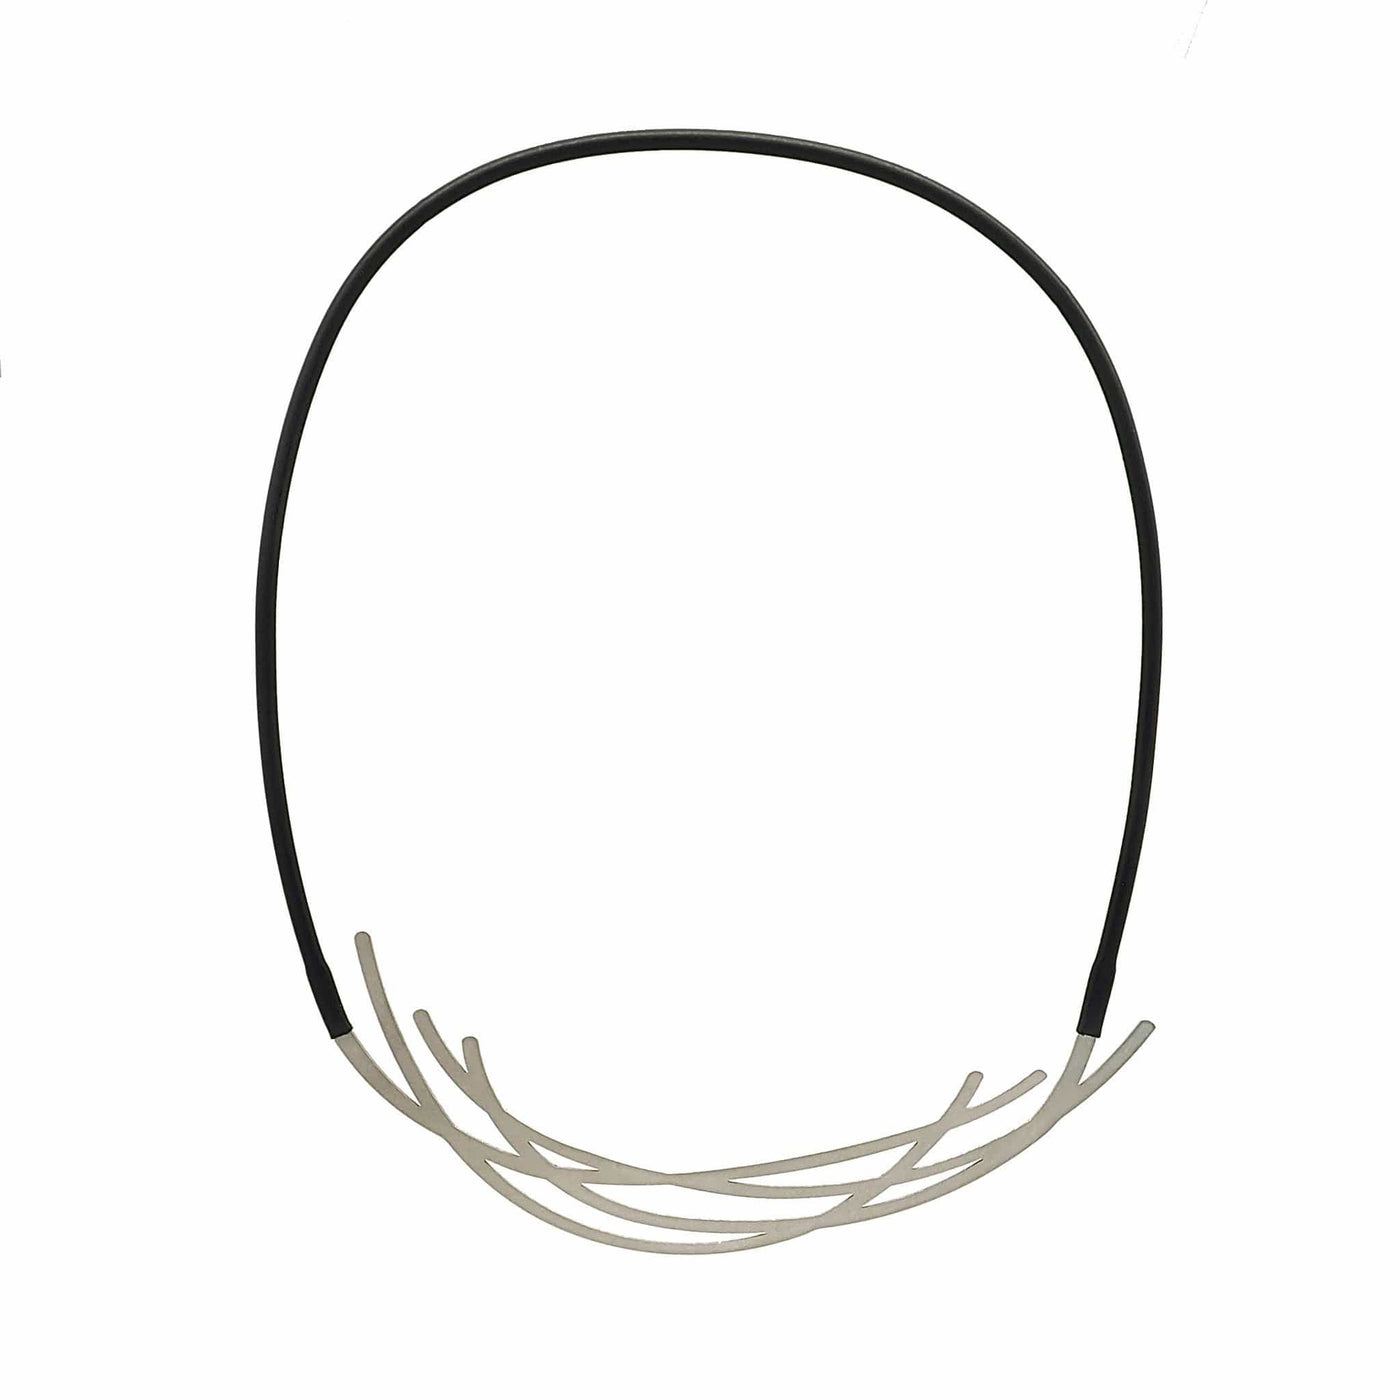 Nest Necklace - Black - inSync design